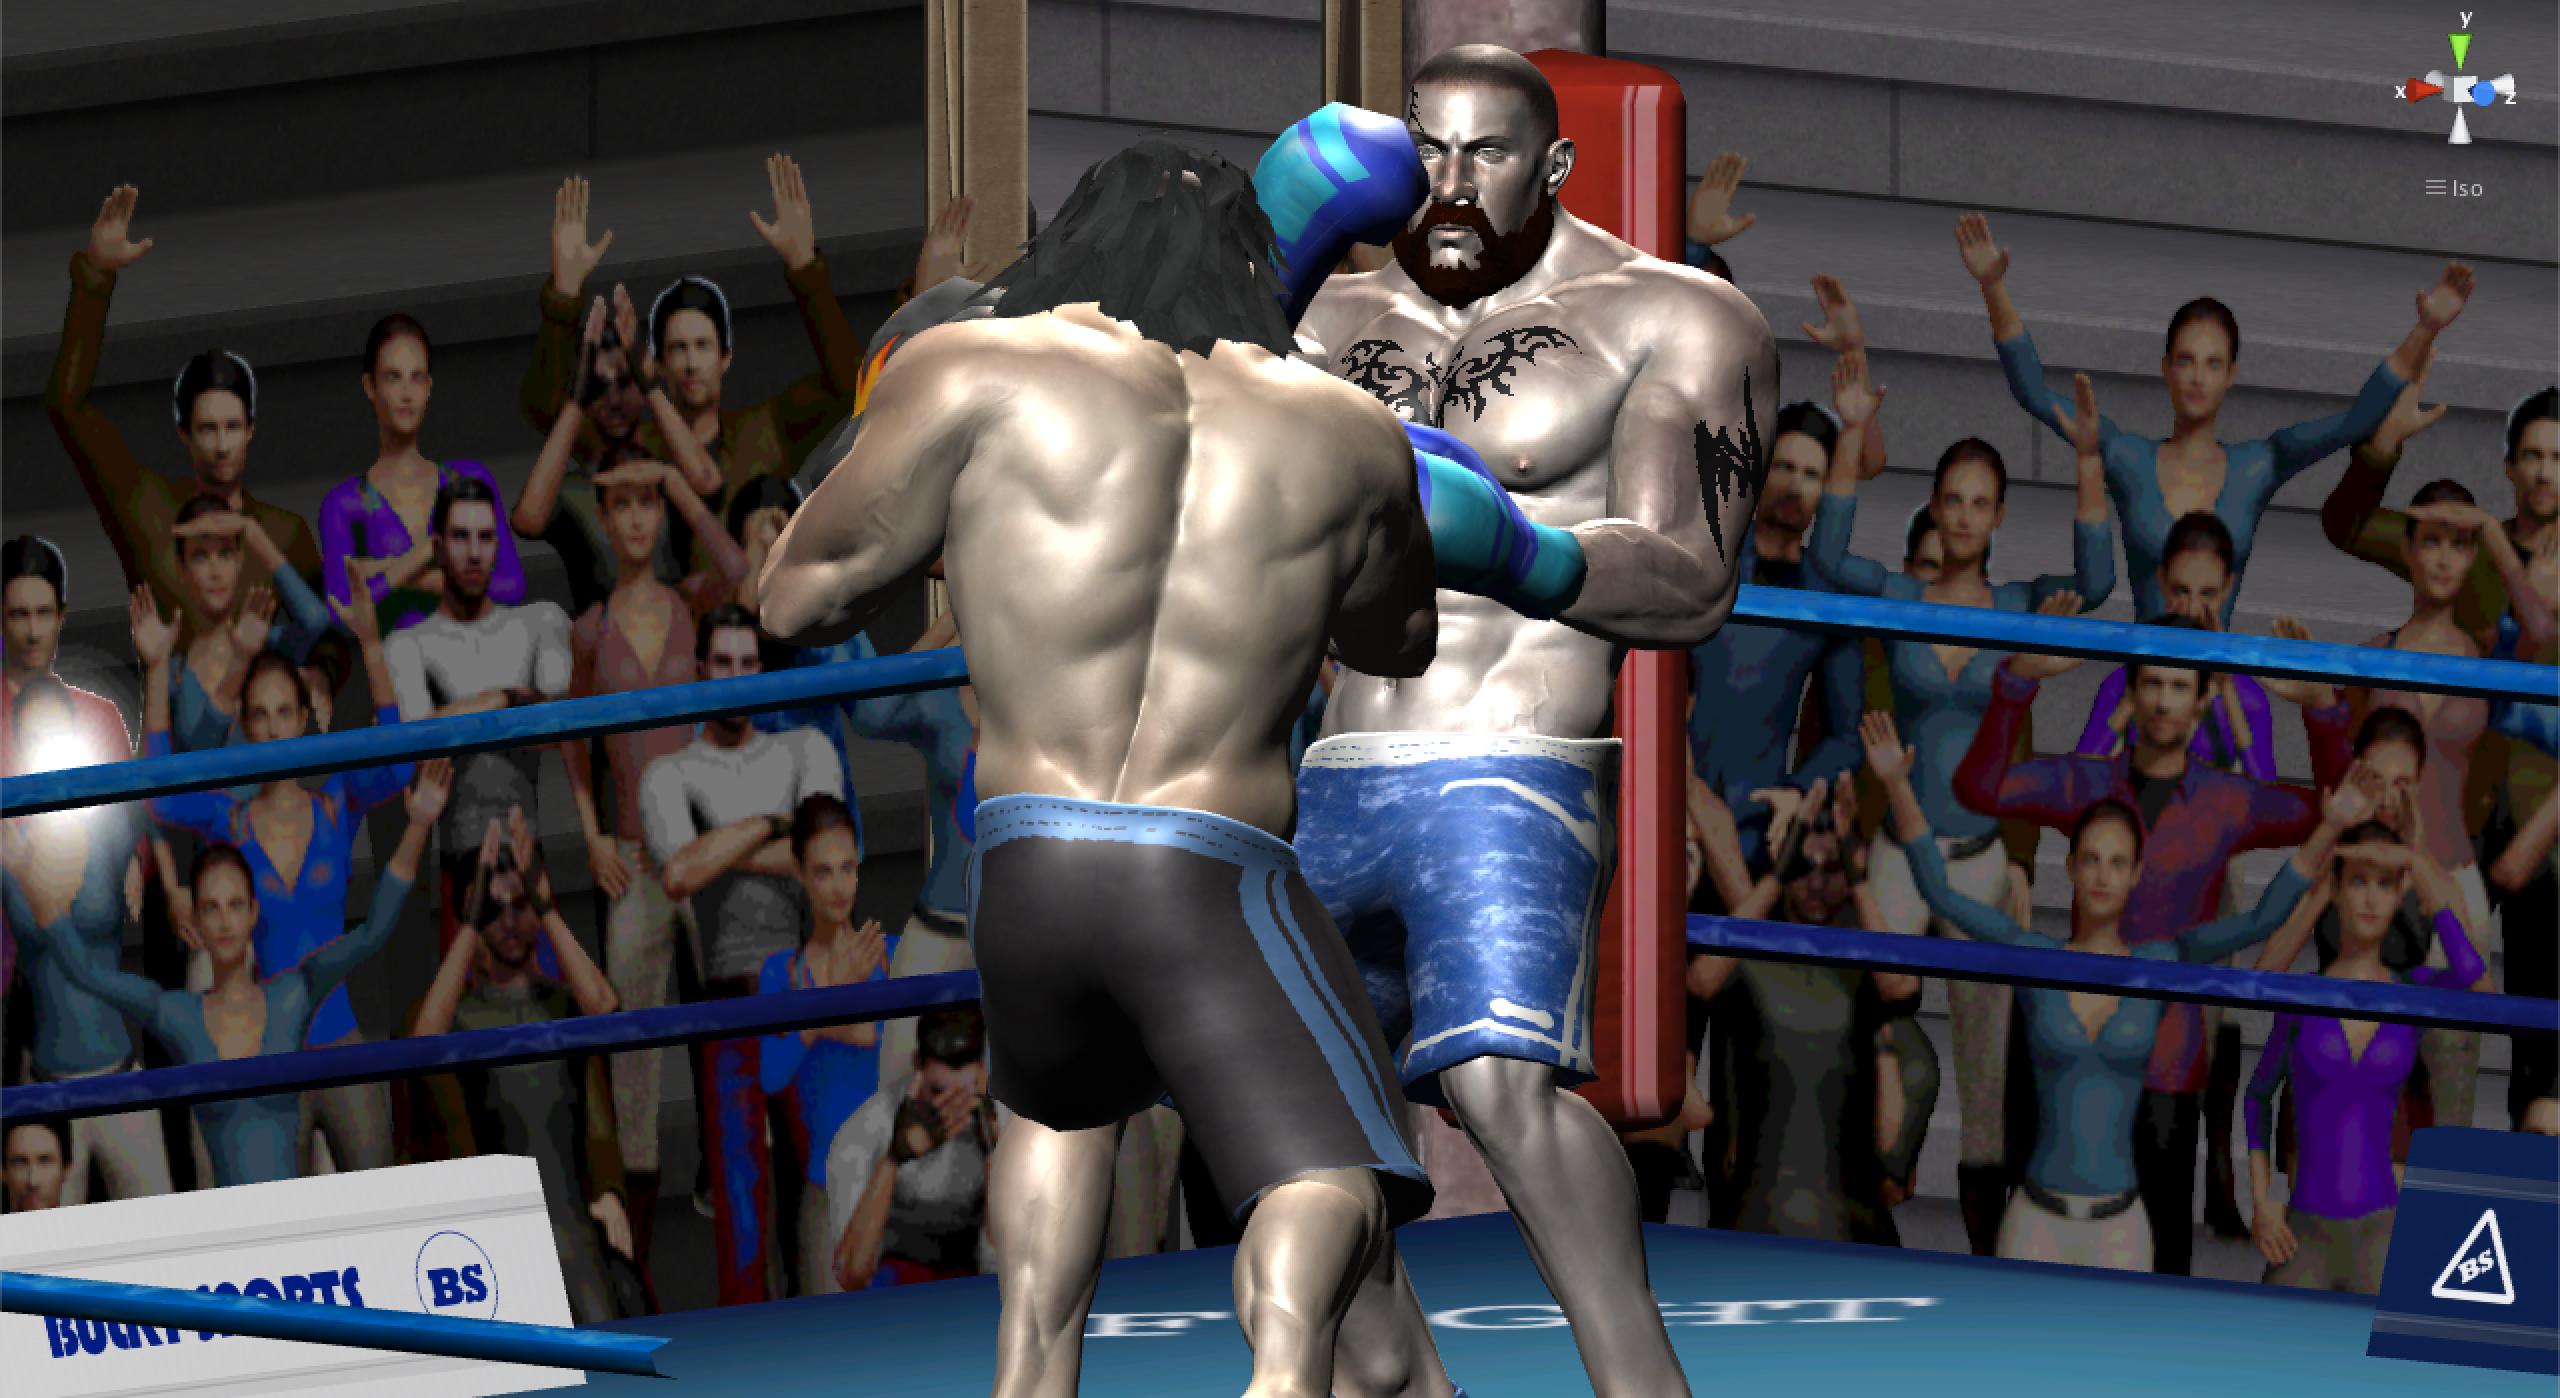 Chronos untitled boxing game